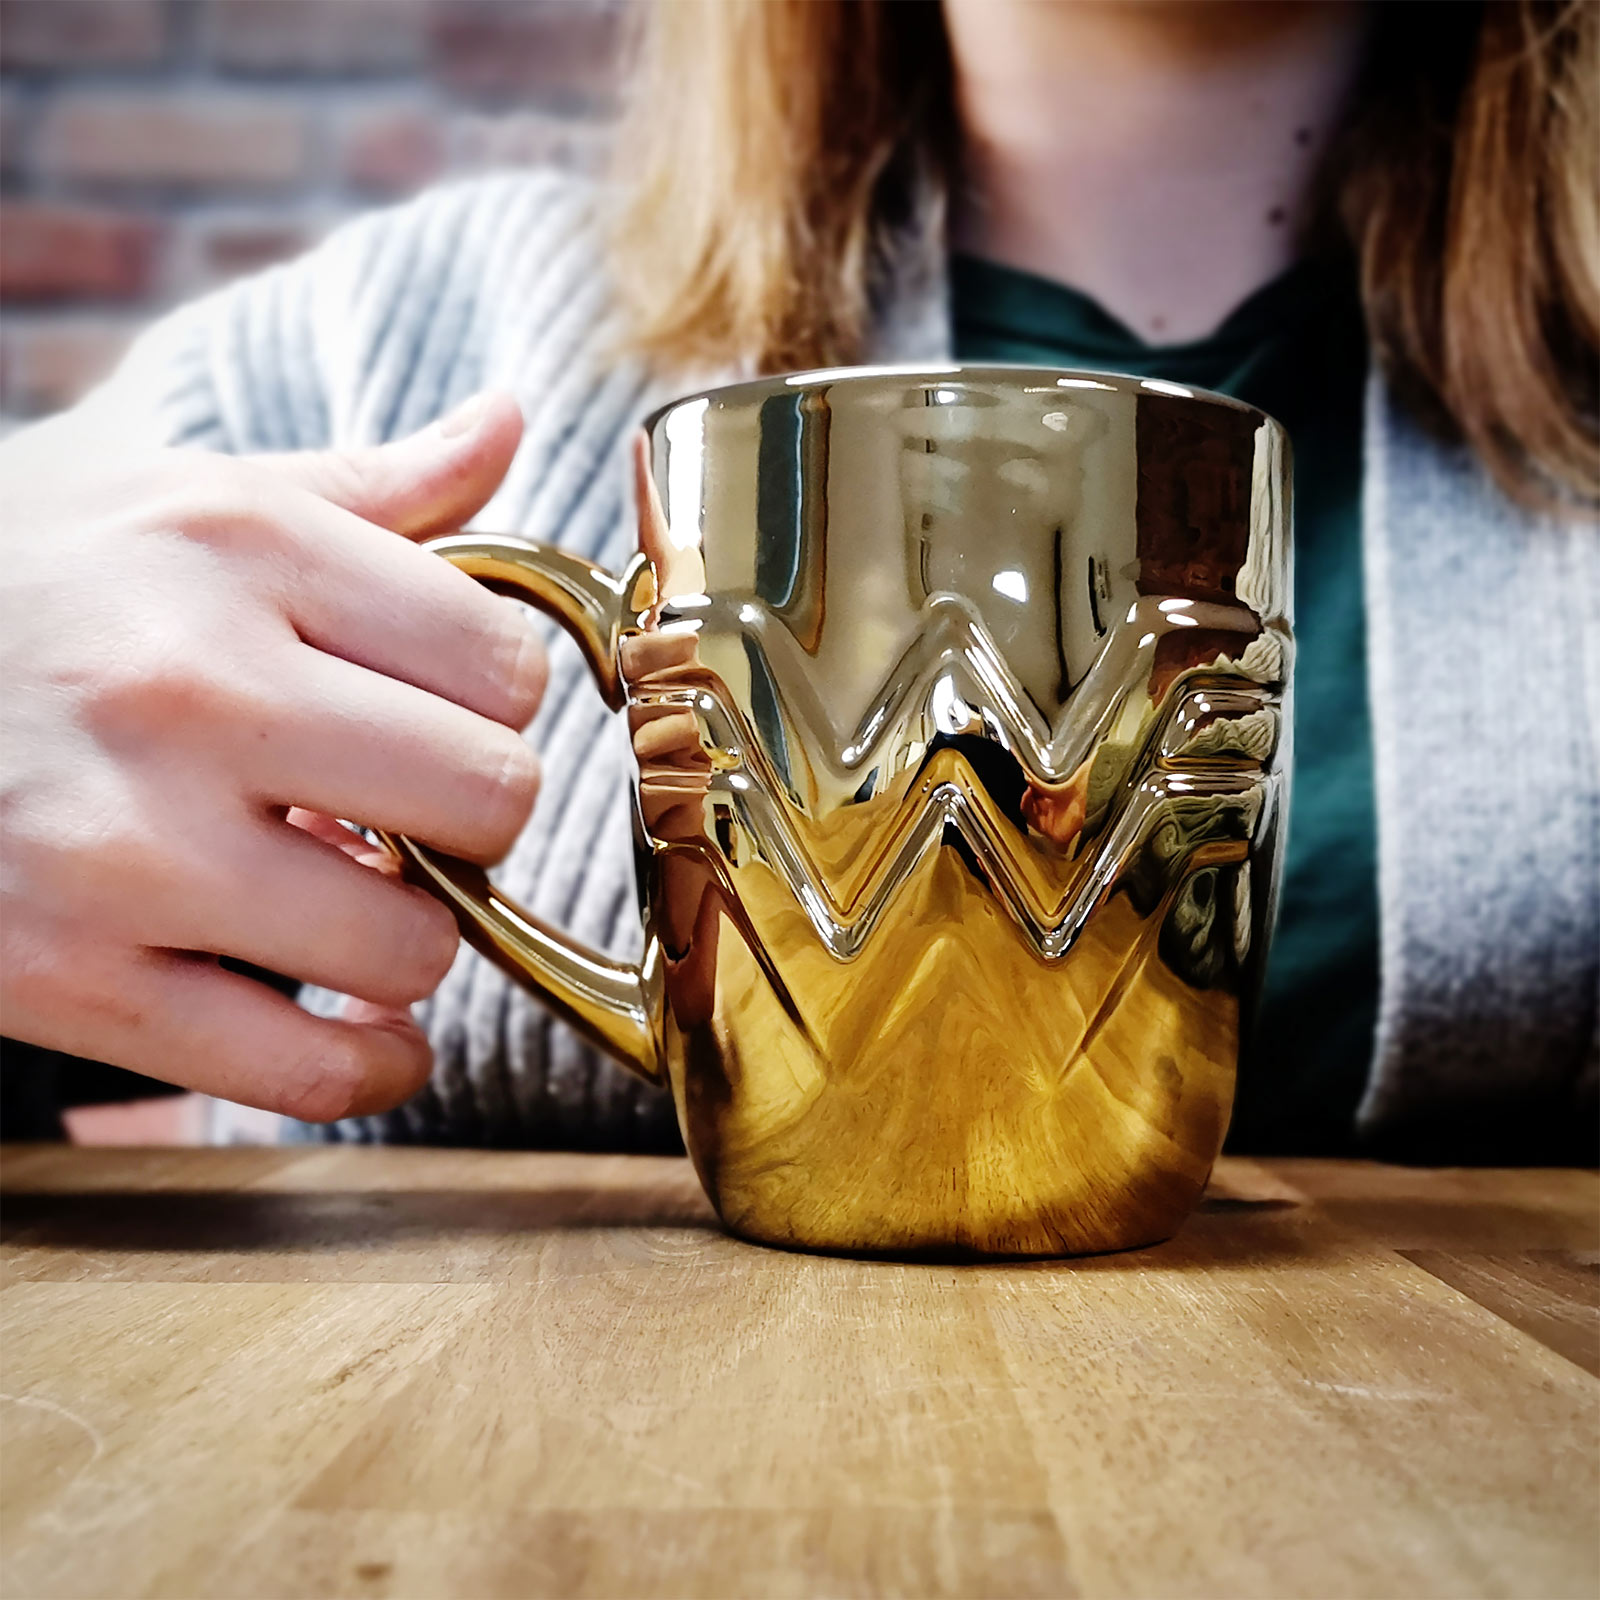 Wonder Woman - Logo Mug Gold Plated